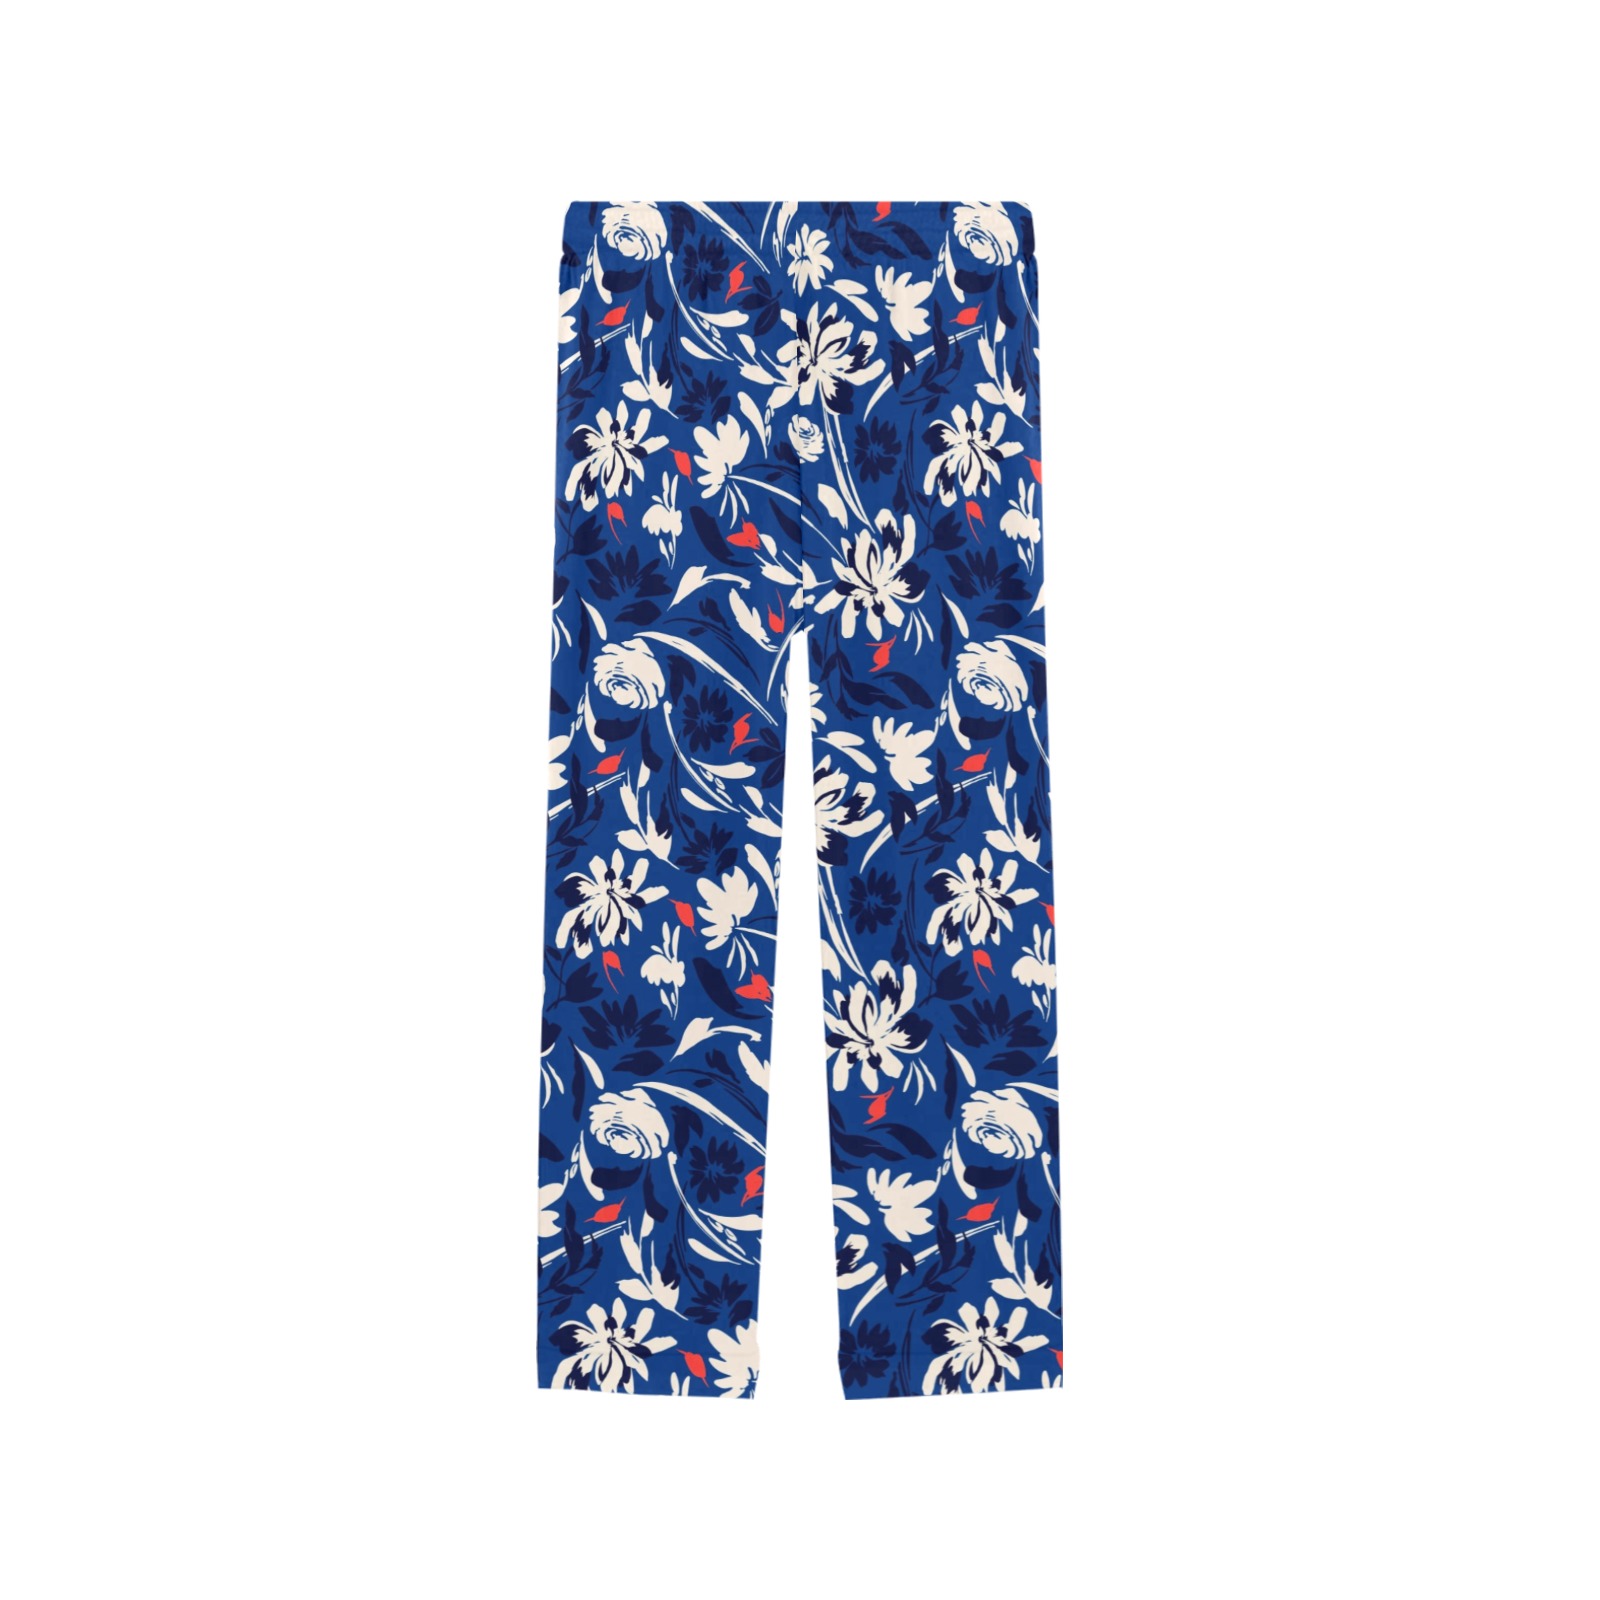 Brushstrokes floral garden BP Women's Pajama Trousers